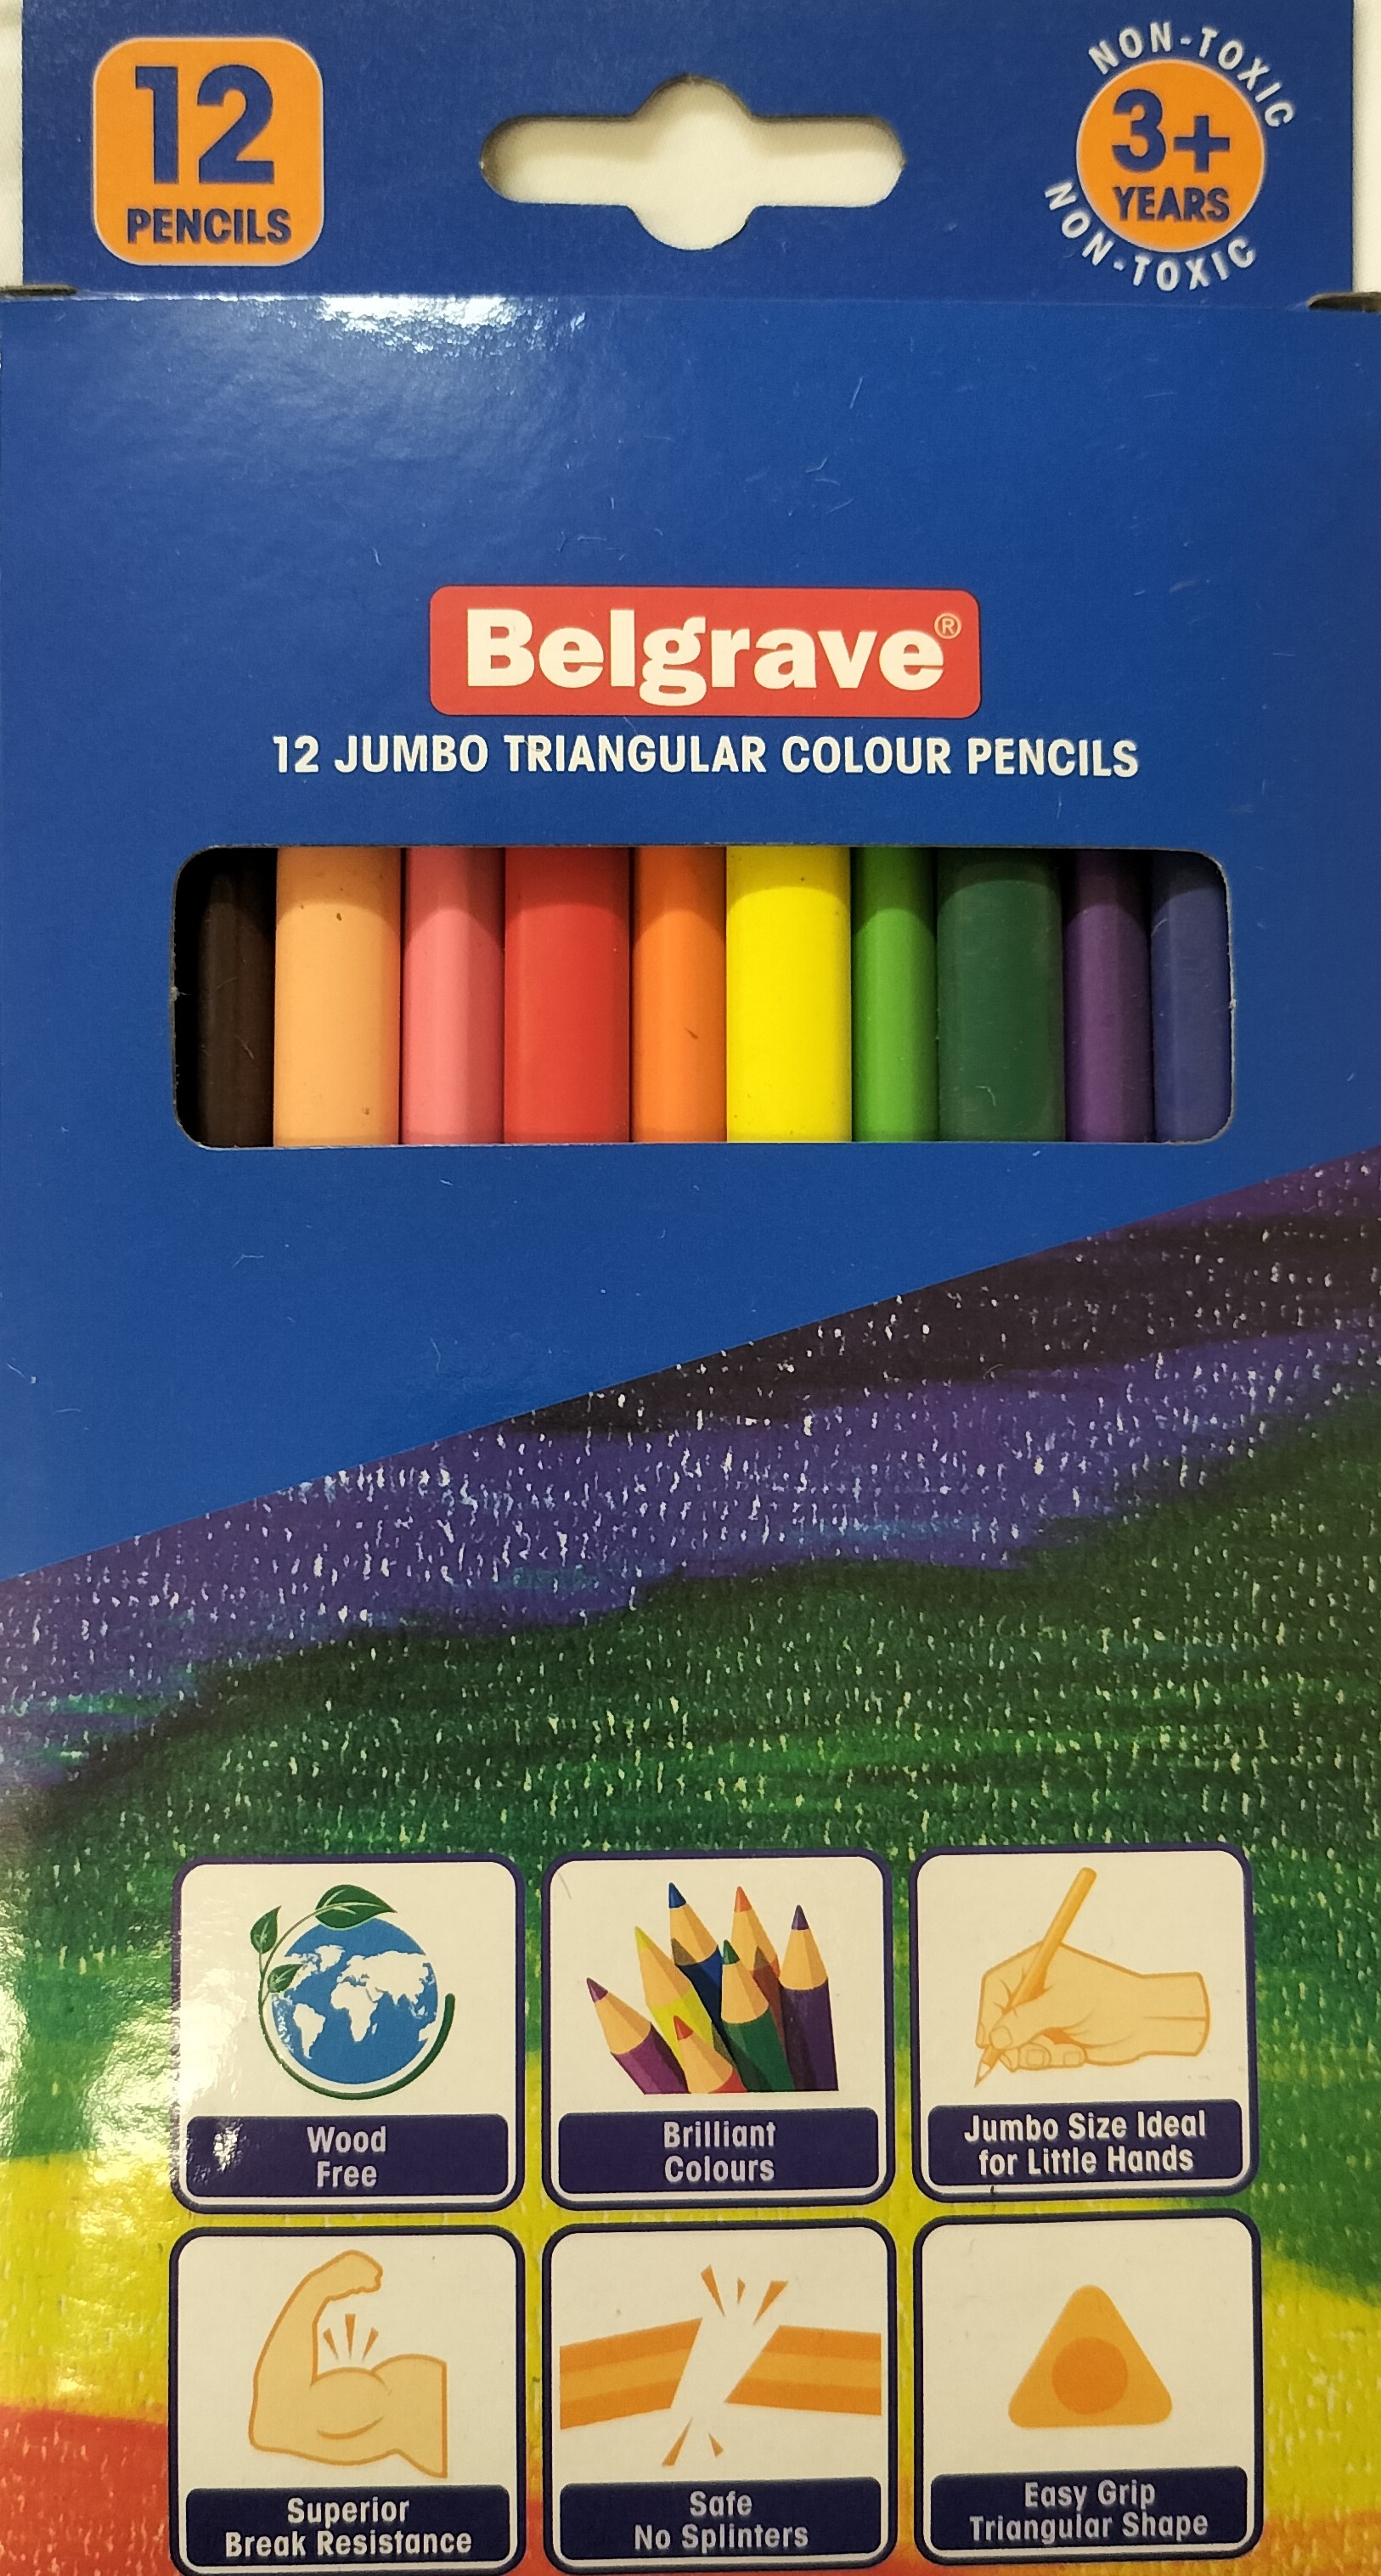 Wood Free Colour Pencils Triangular Jumbo Full Pk12 Belgrave